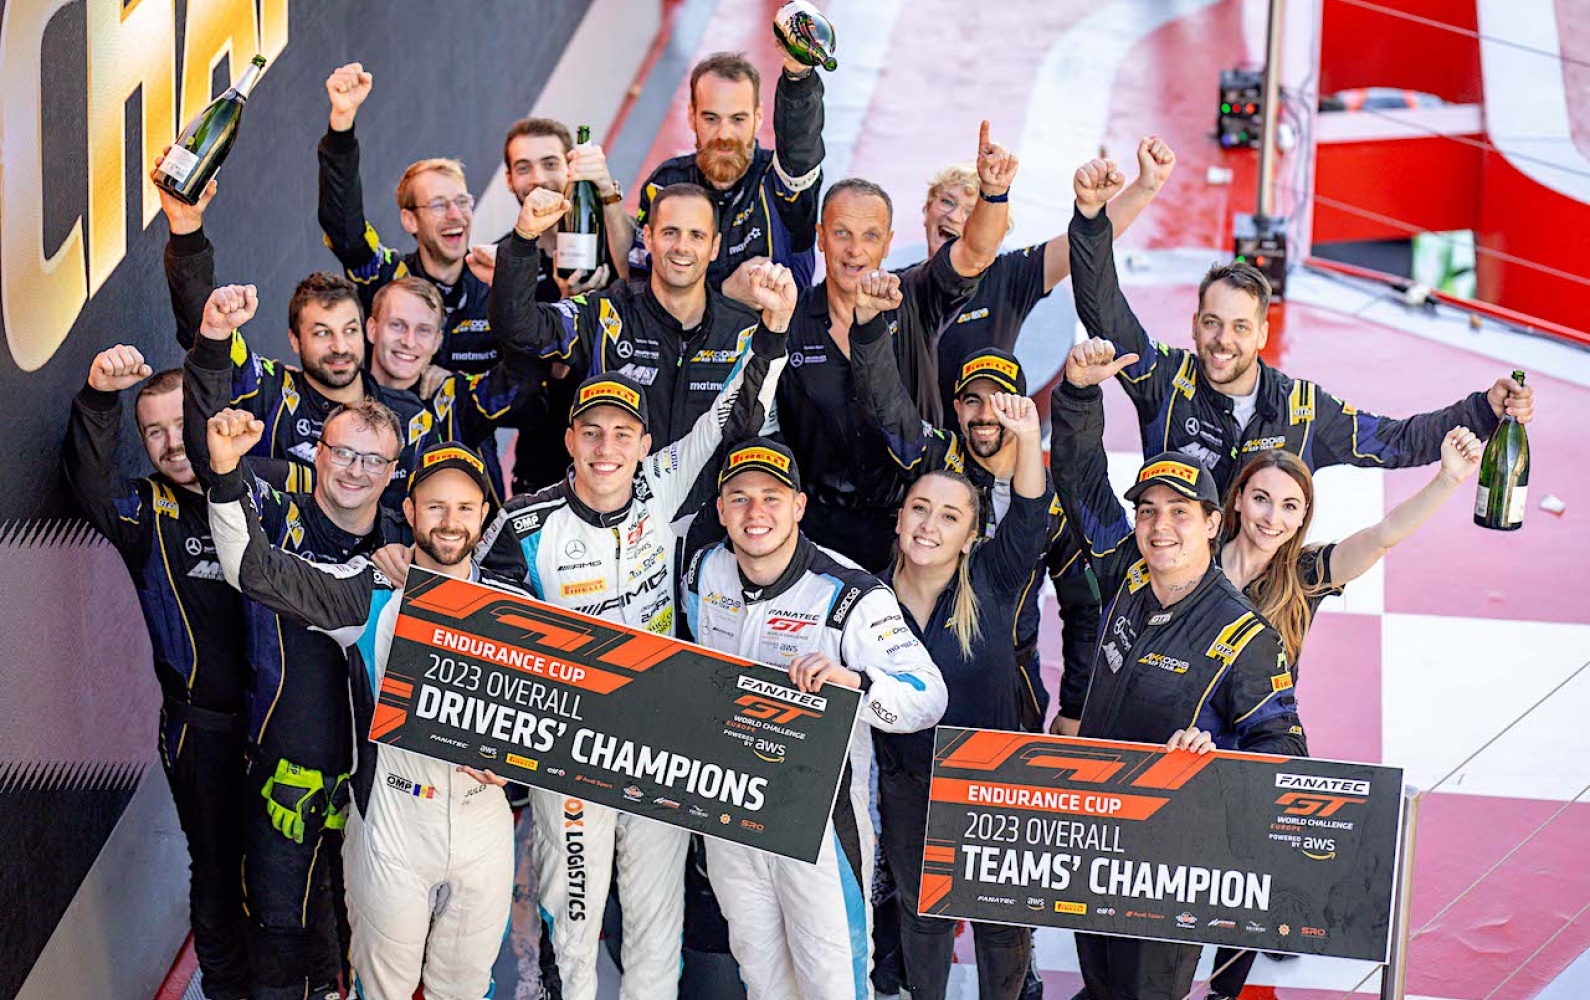 Fanatec GT World - Endurance (Barcelona) - Champions 2023!